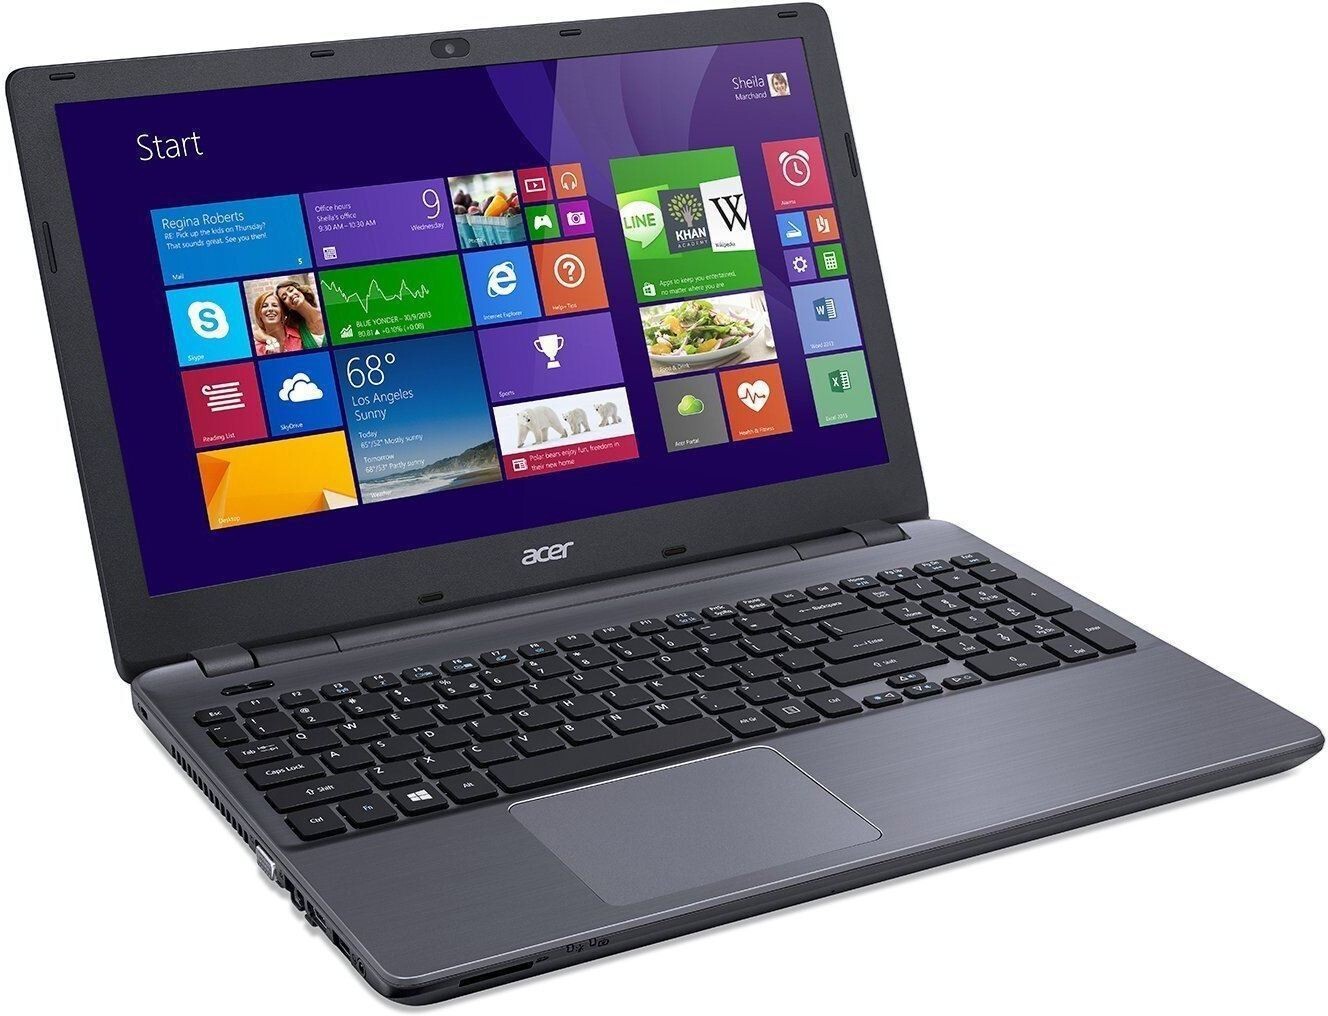 Laptop Acer Aspire E5-573G-554A NX.MVMSV.004 - Intel Core i5-4210U, VGA 2G, 15.6 inch